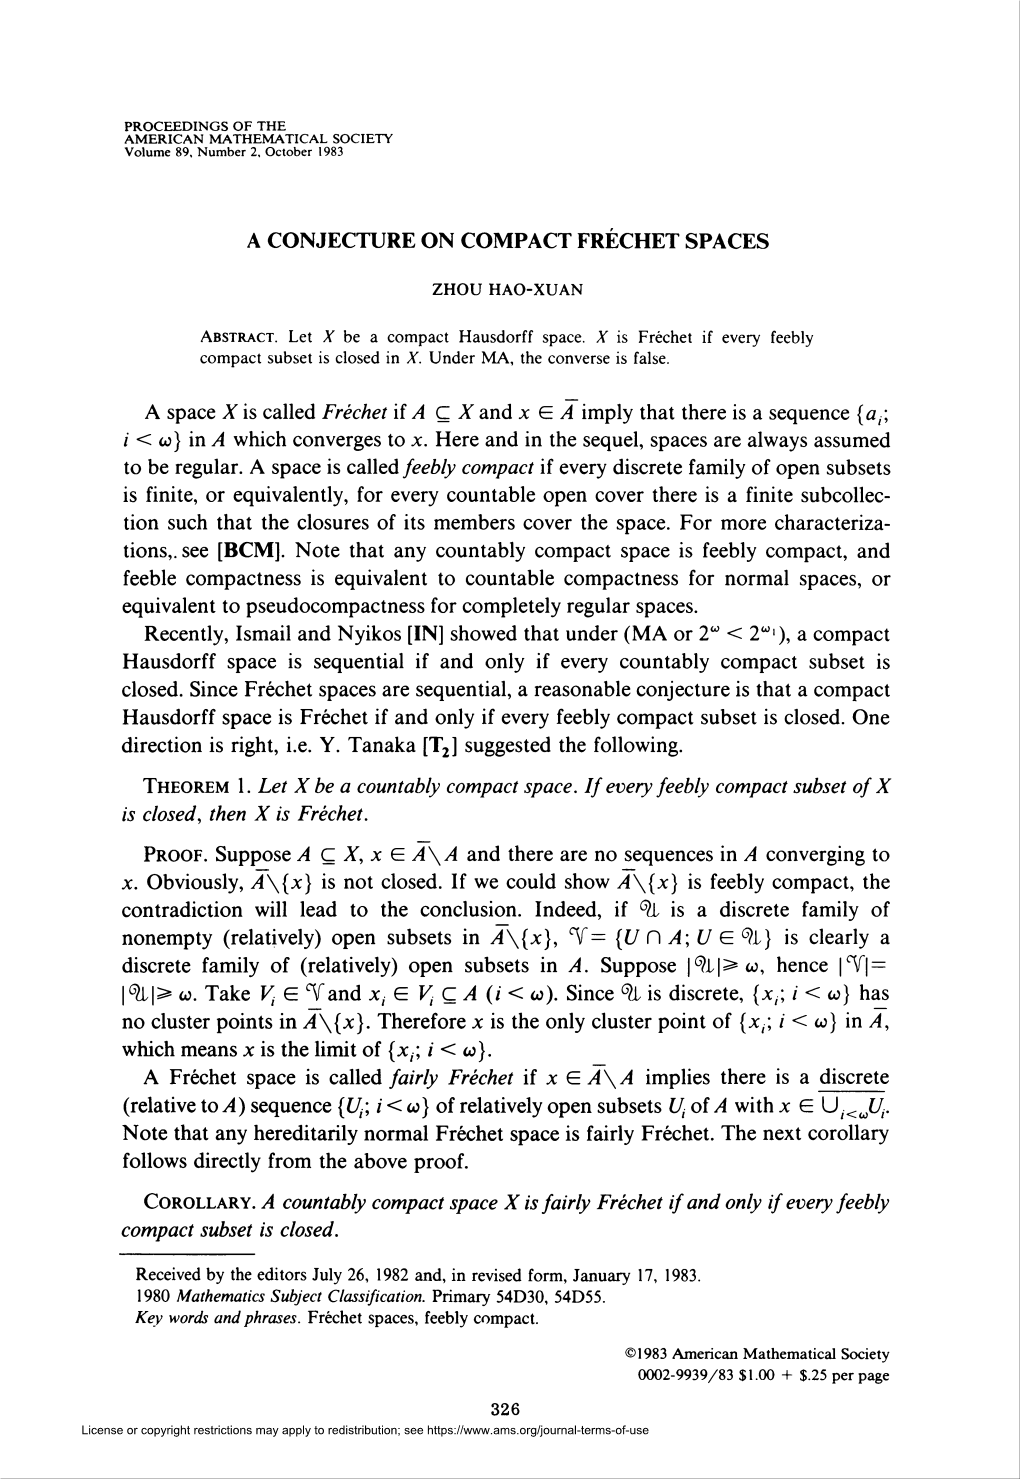 A Conjecture on Compact Fréchet Spaces